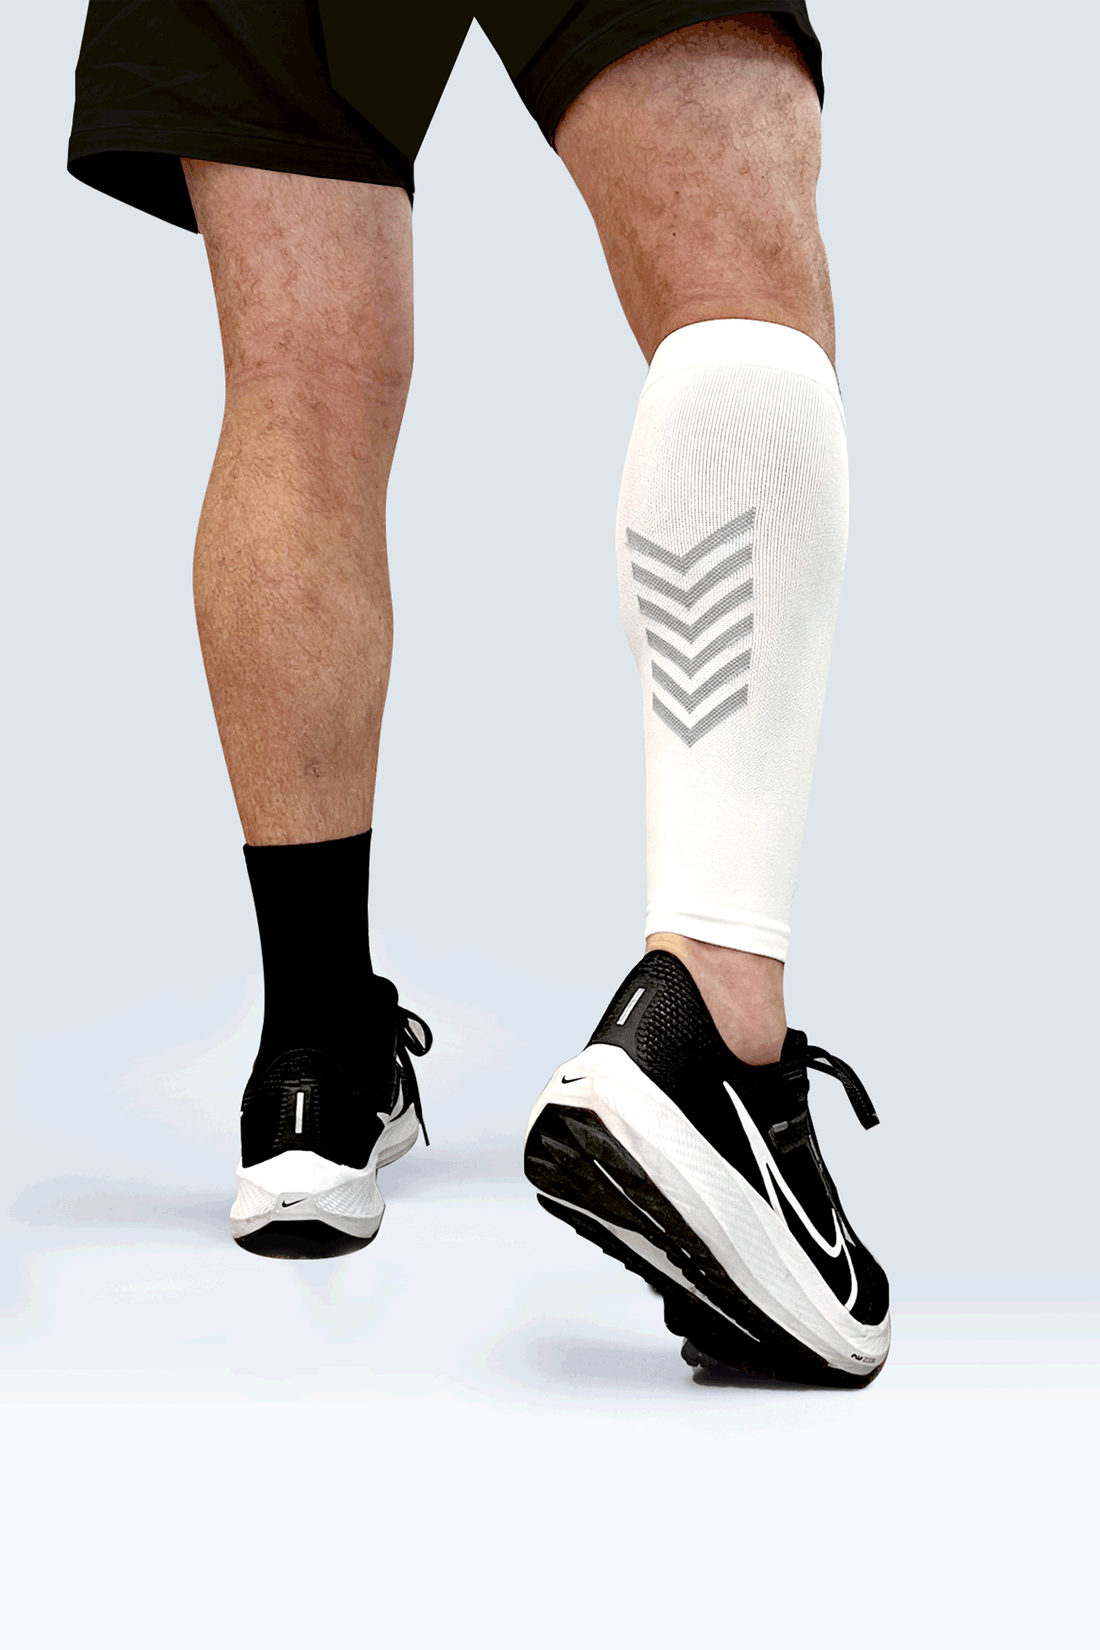 Nike Elite Compression Sleeve